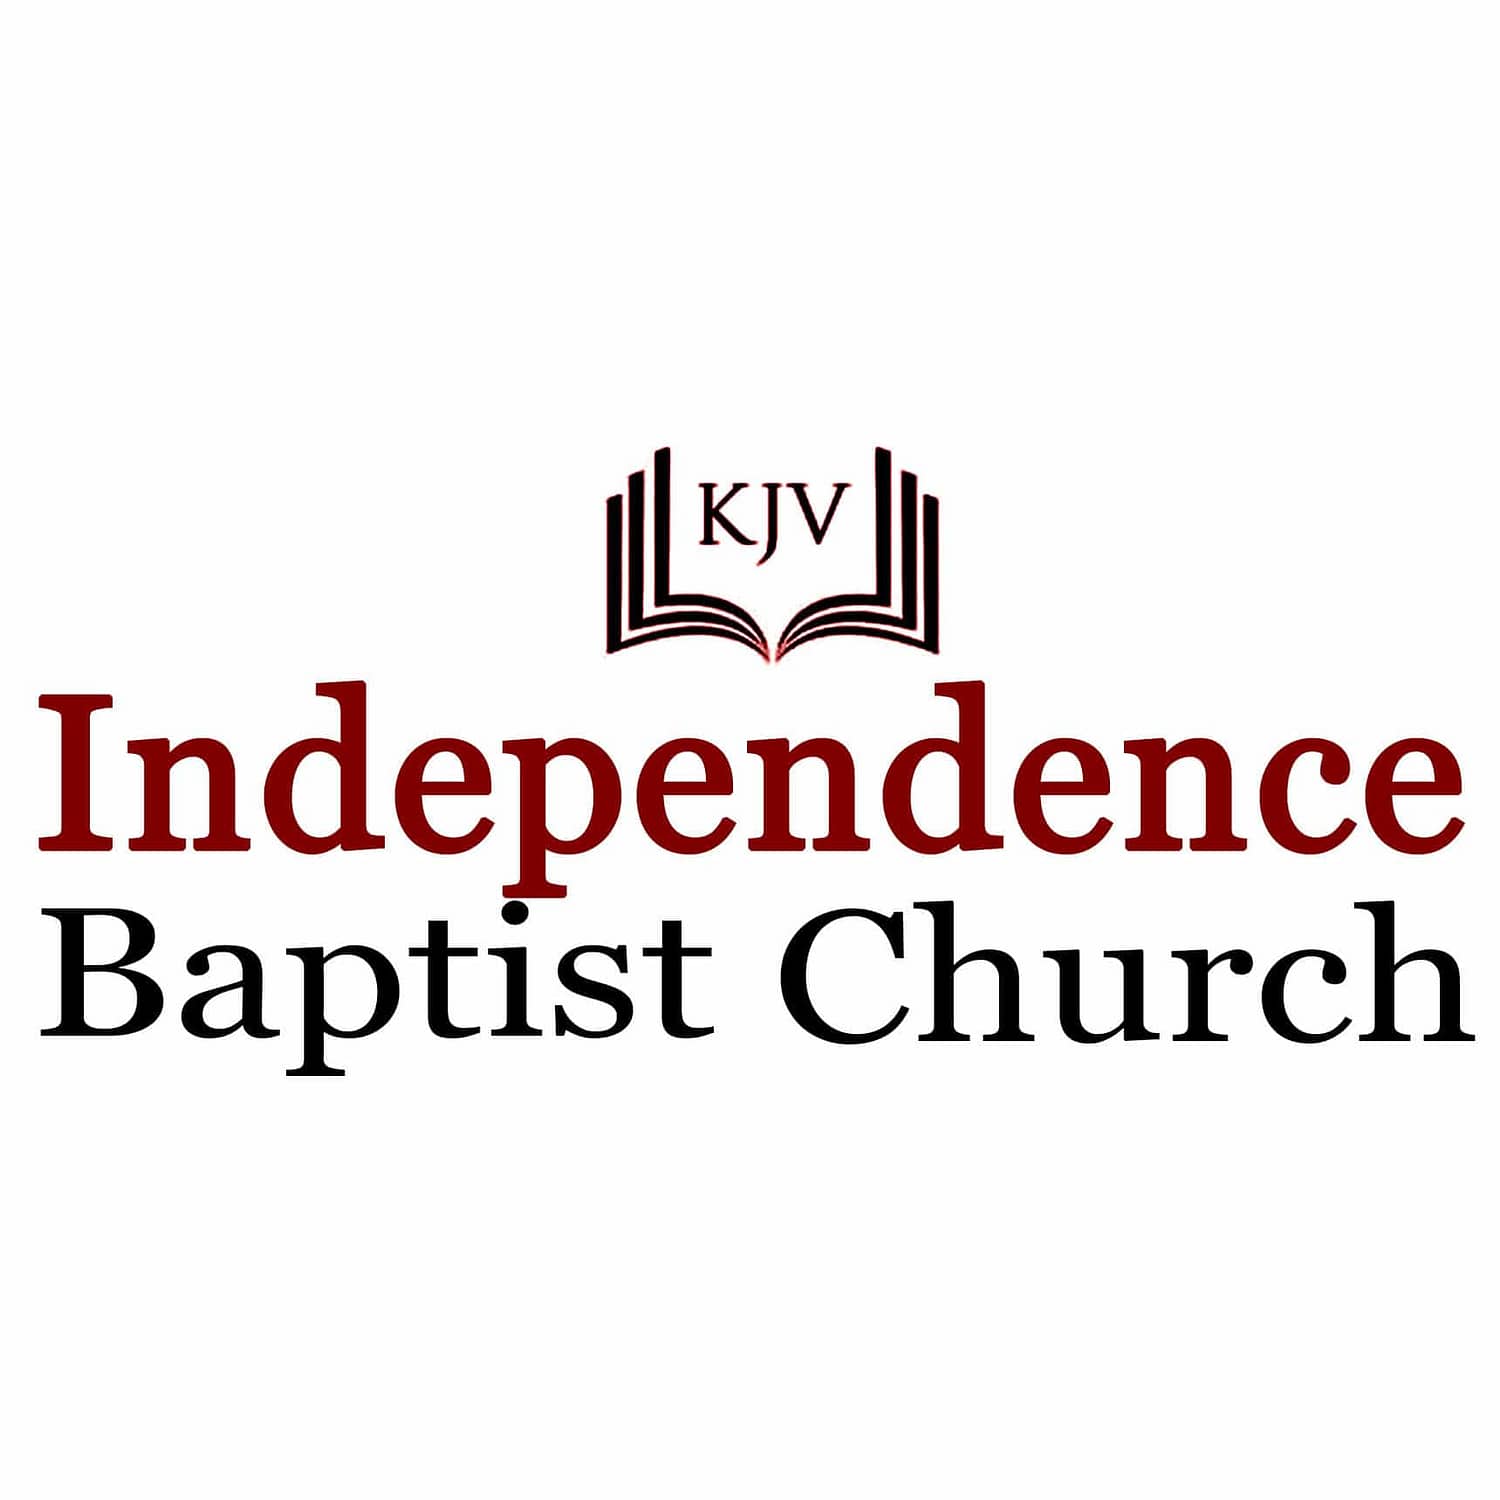 Independence Baptist Church in Ocala, Florida website